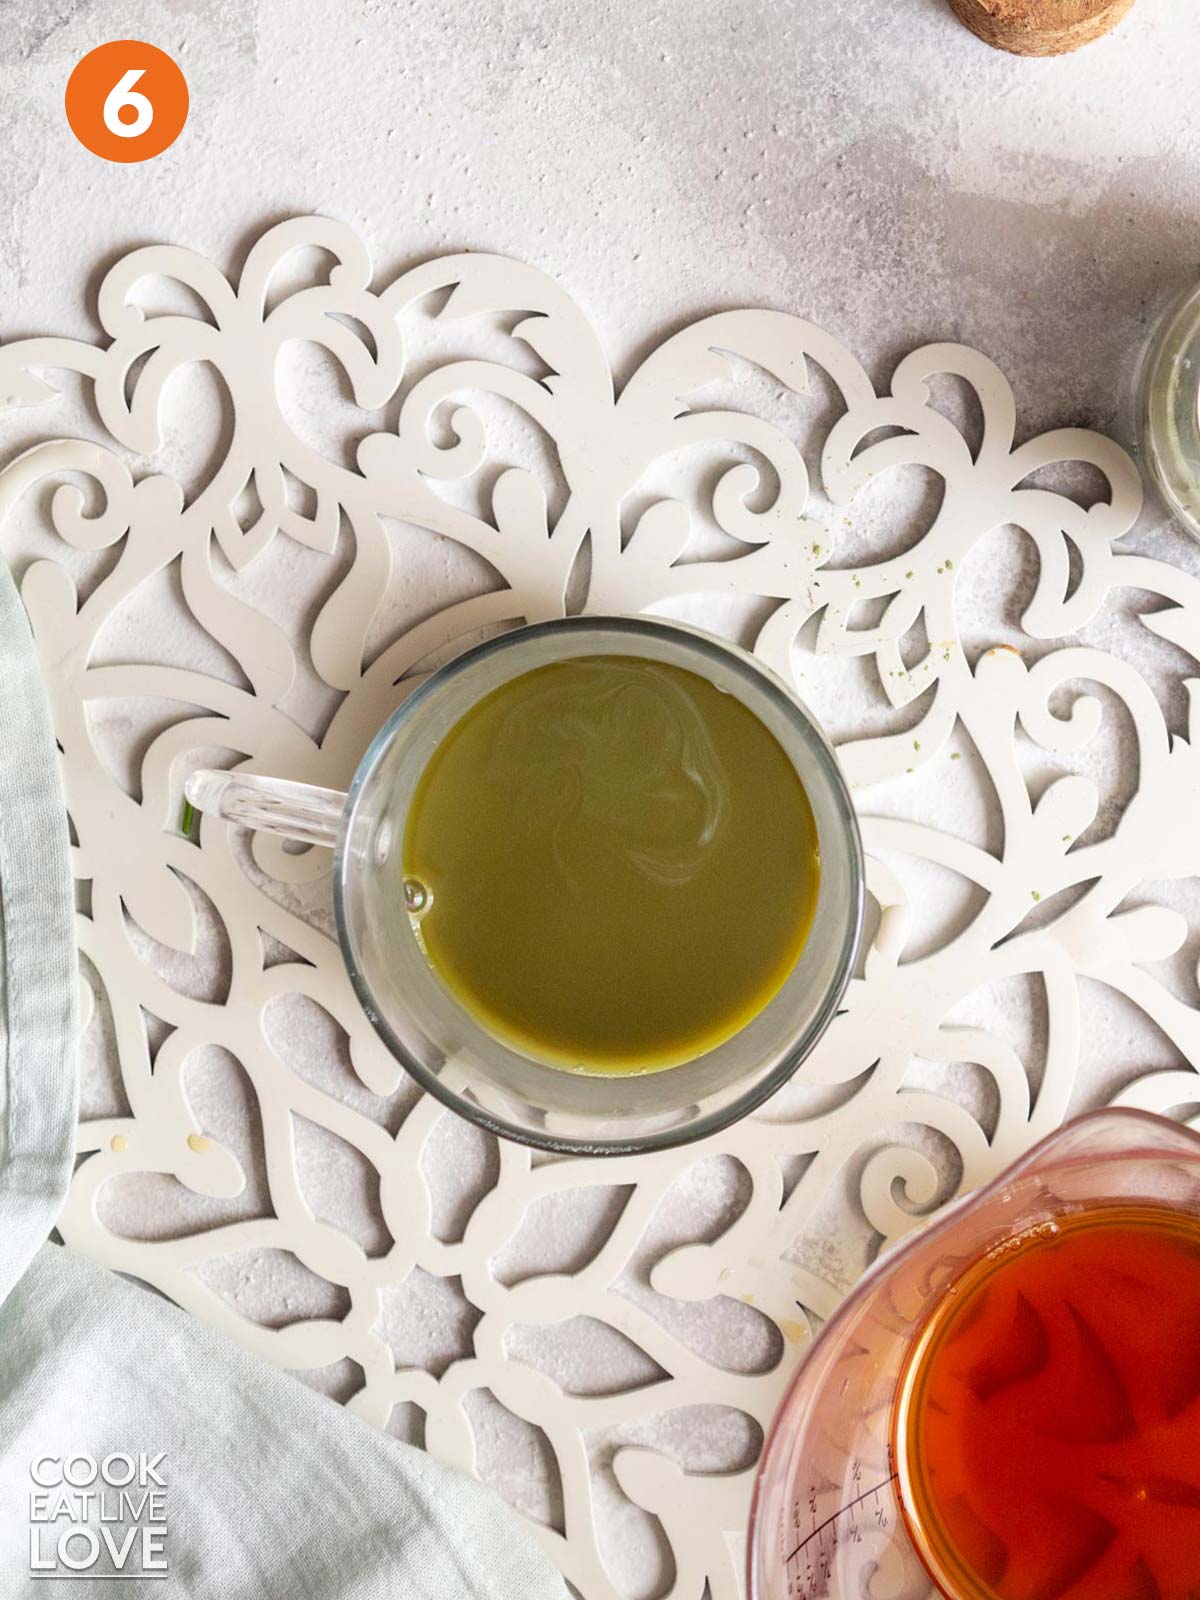 Matcha and chai tea combined in a glass mug.